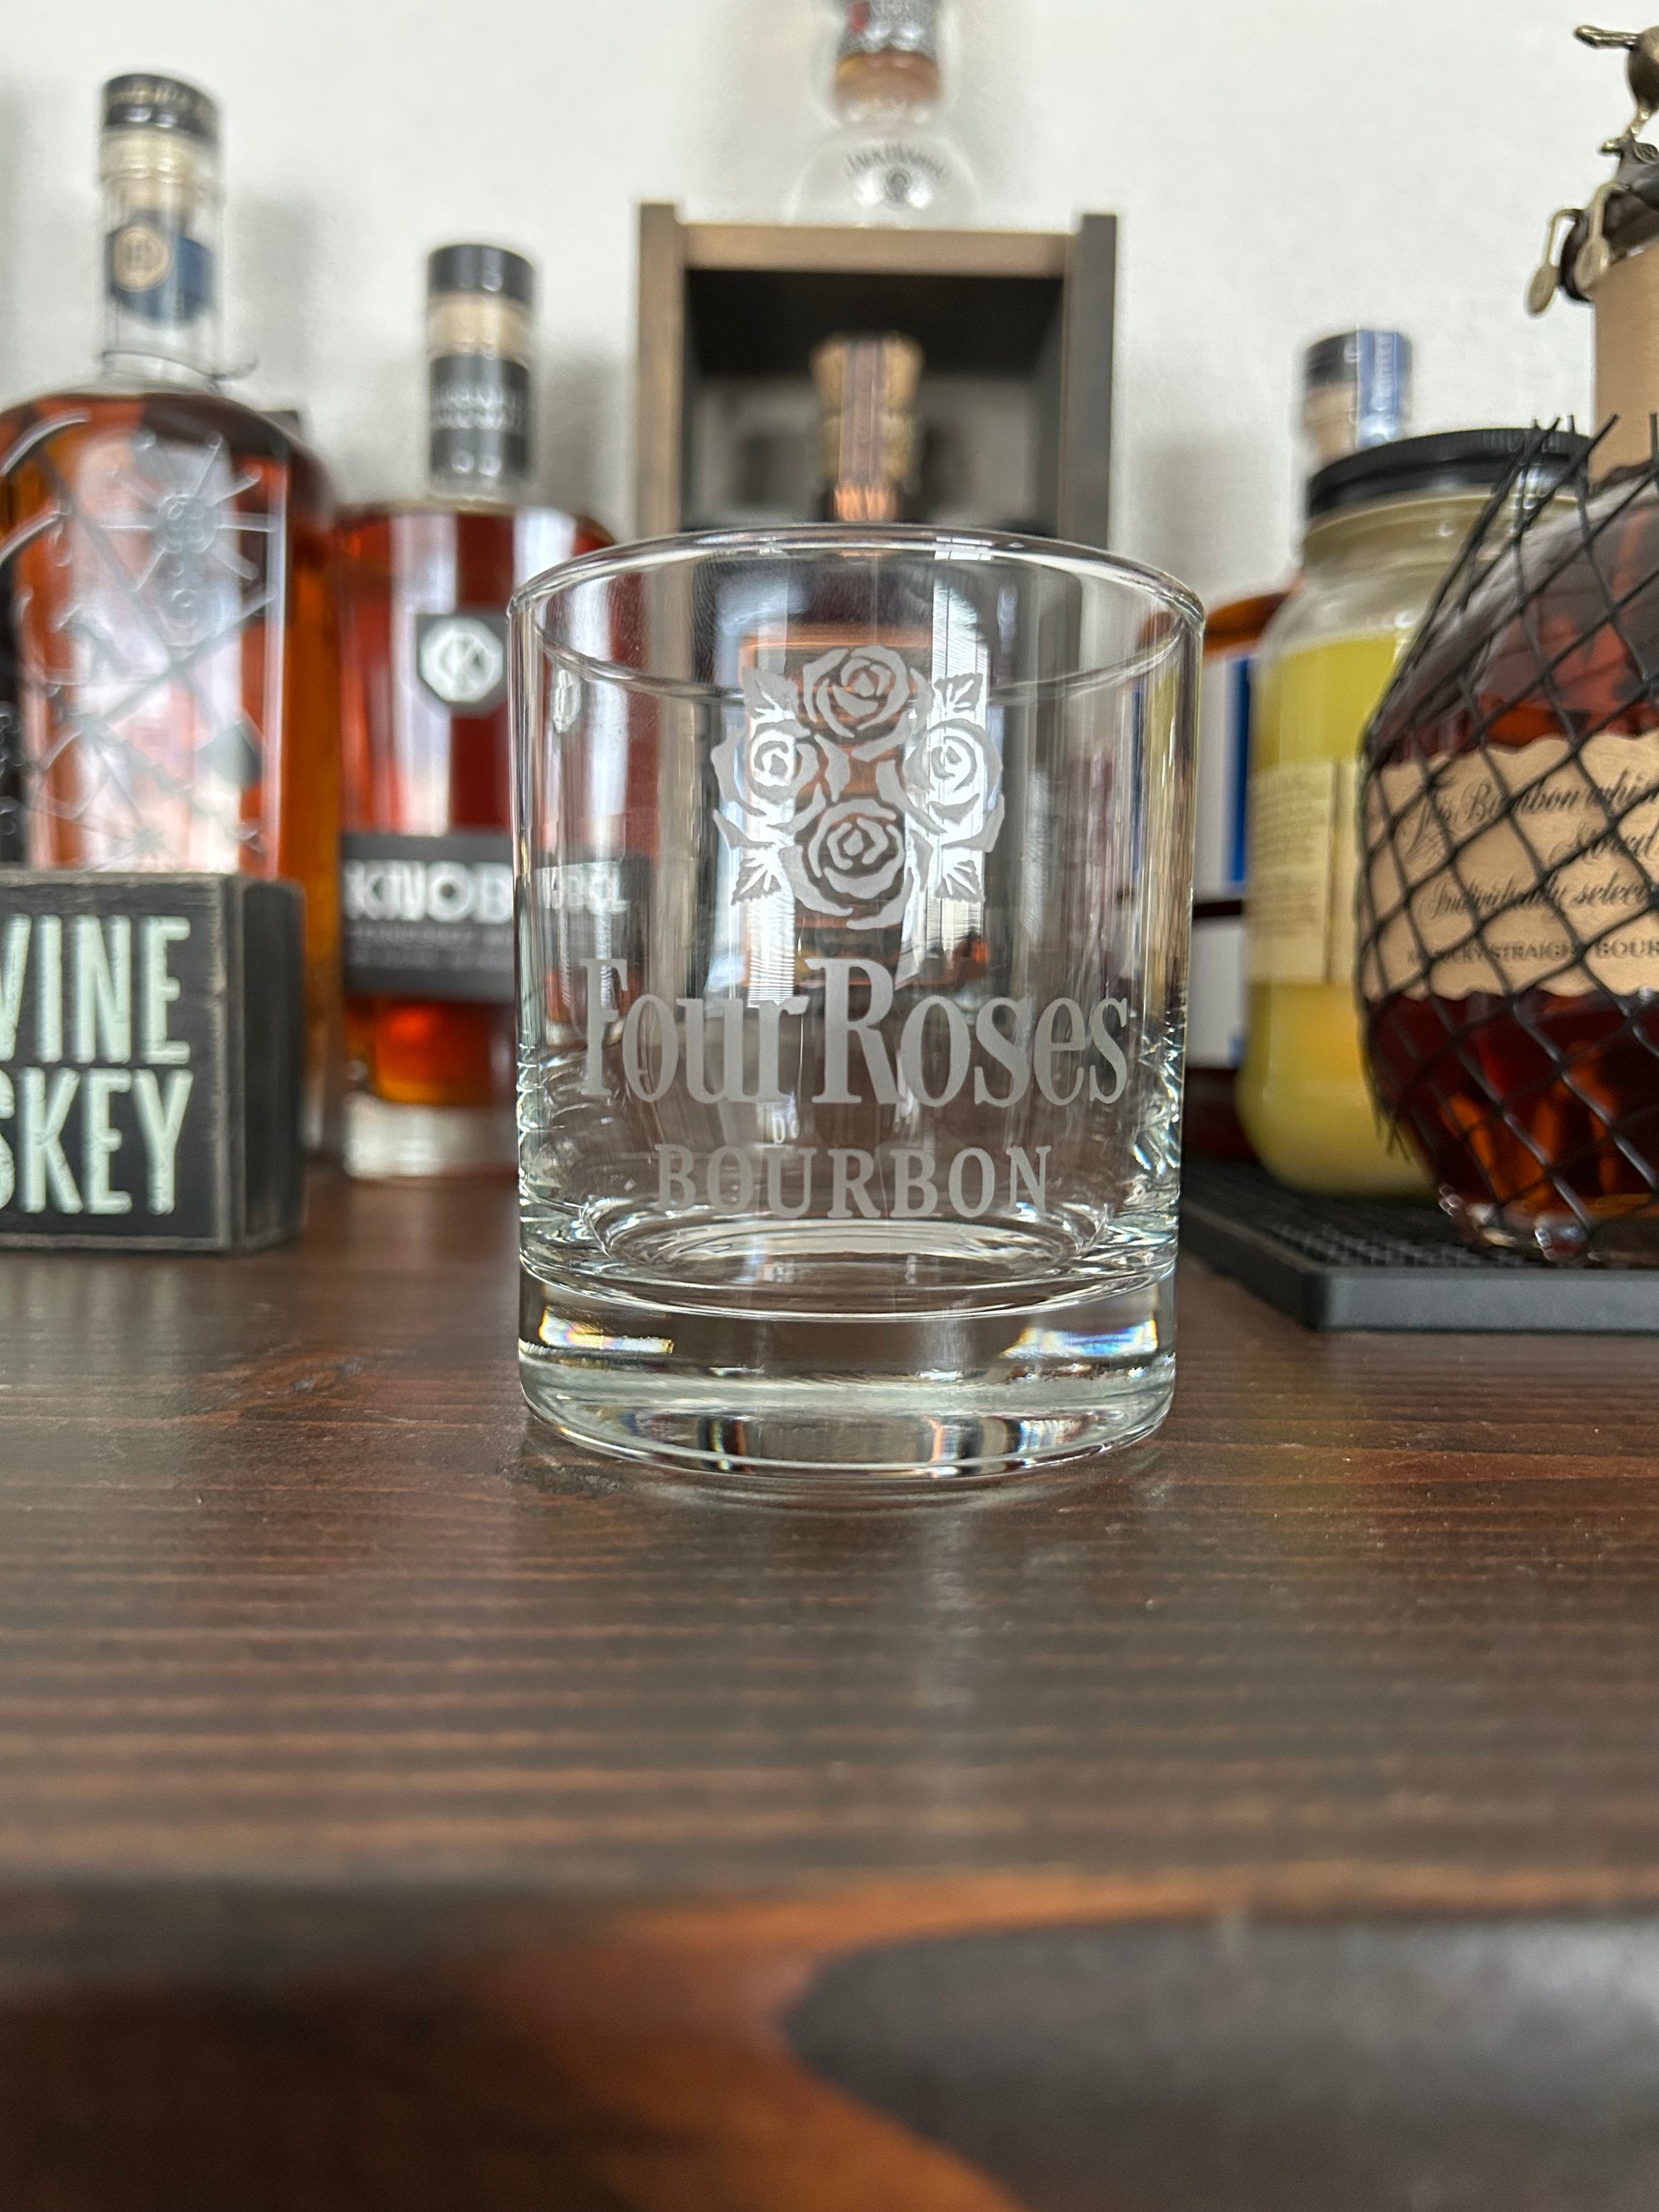 Four Roses Bourbon Whiskey Rocks Glass - 11oz